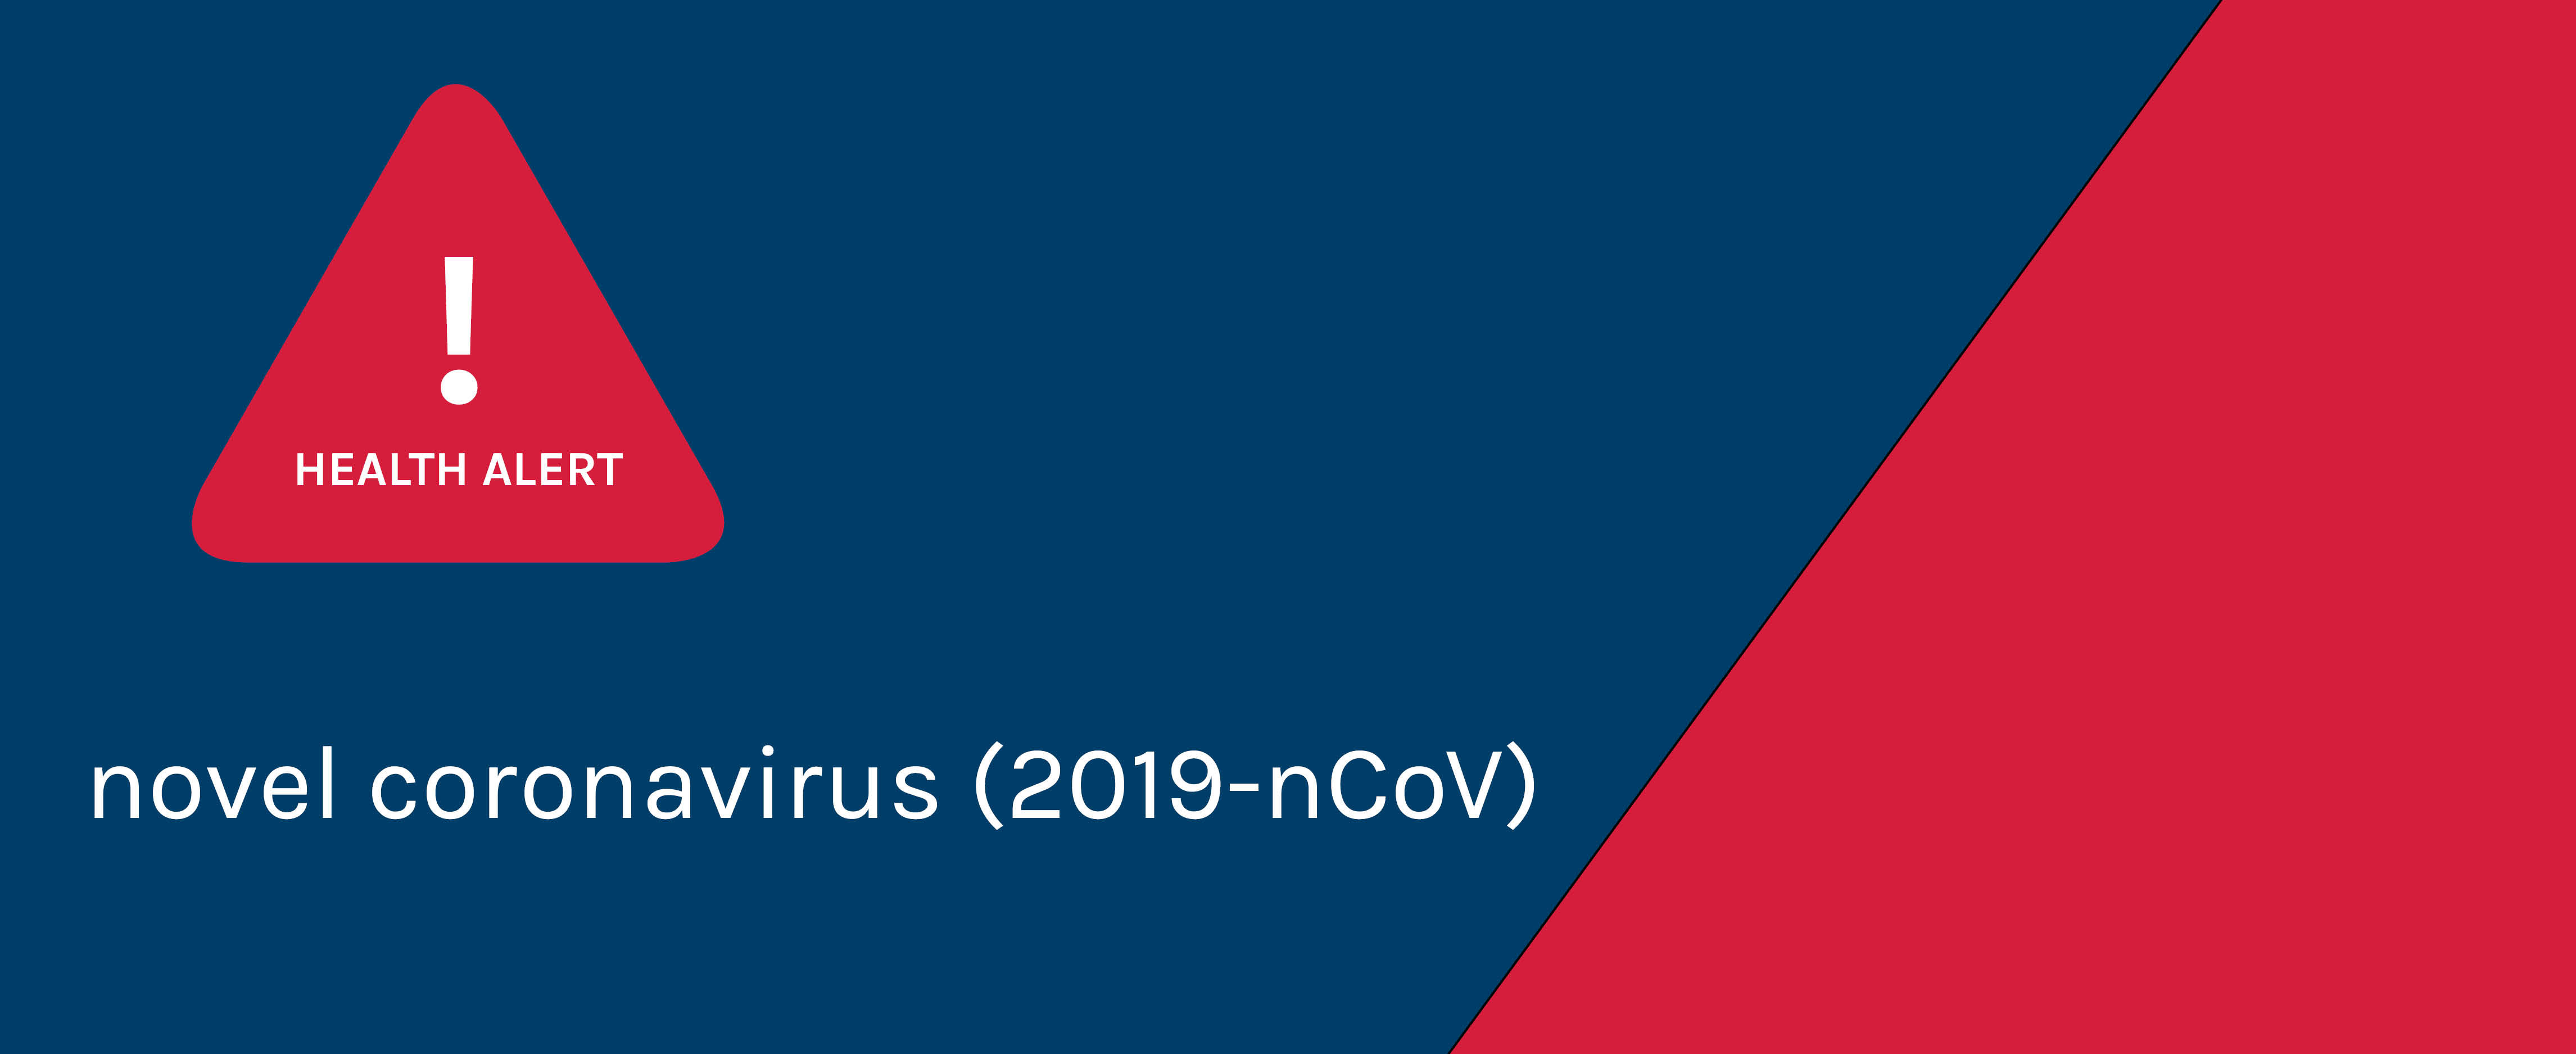 CHO Health Alert - 2019 Novel Coronavirus - Update to Alert issued 25 January 2020